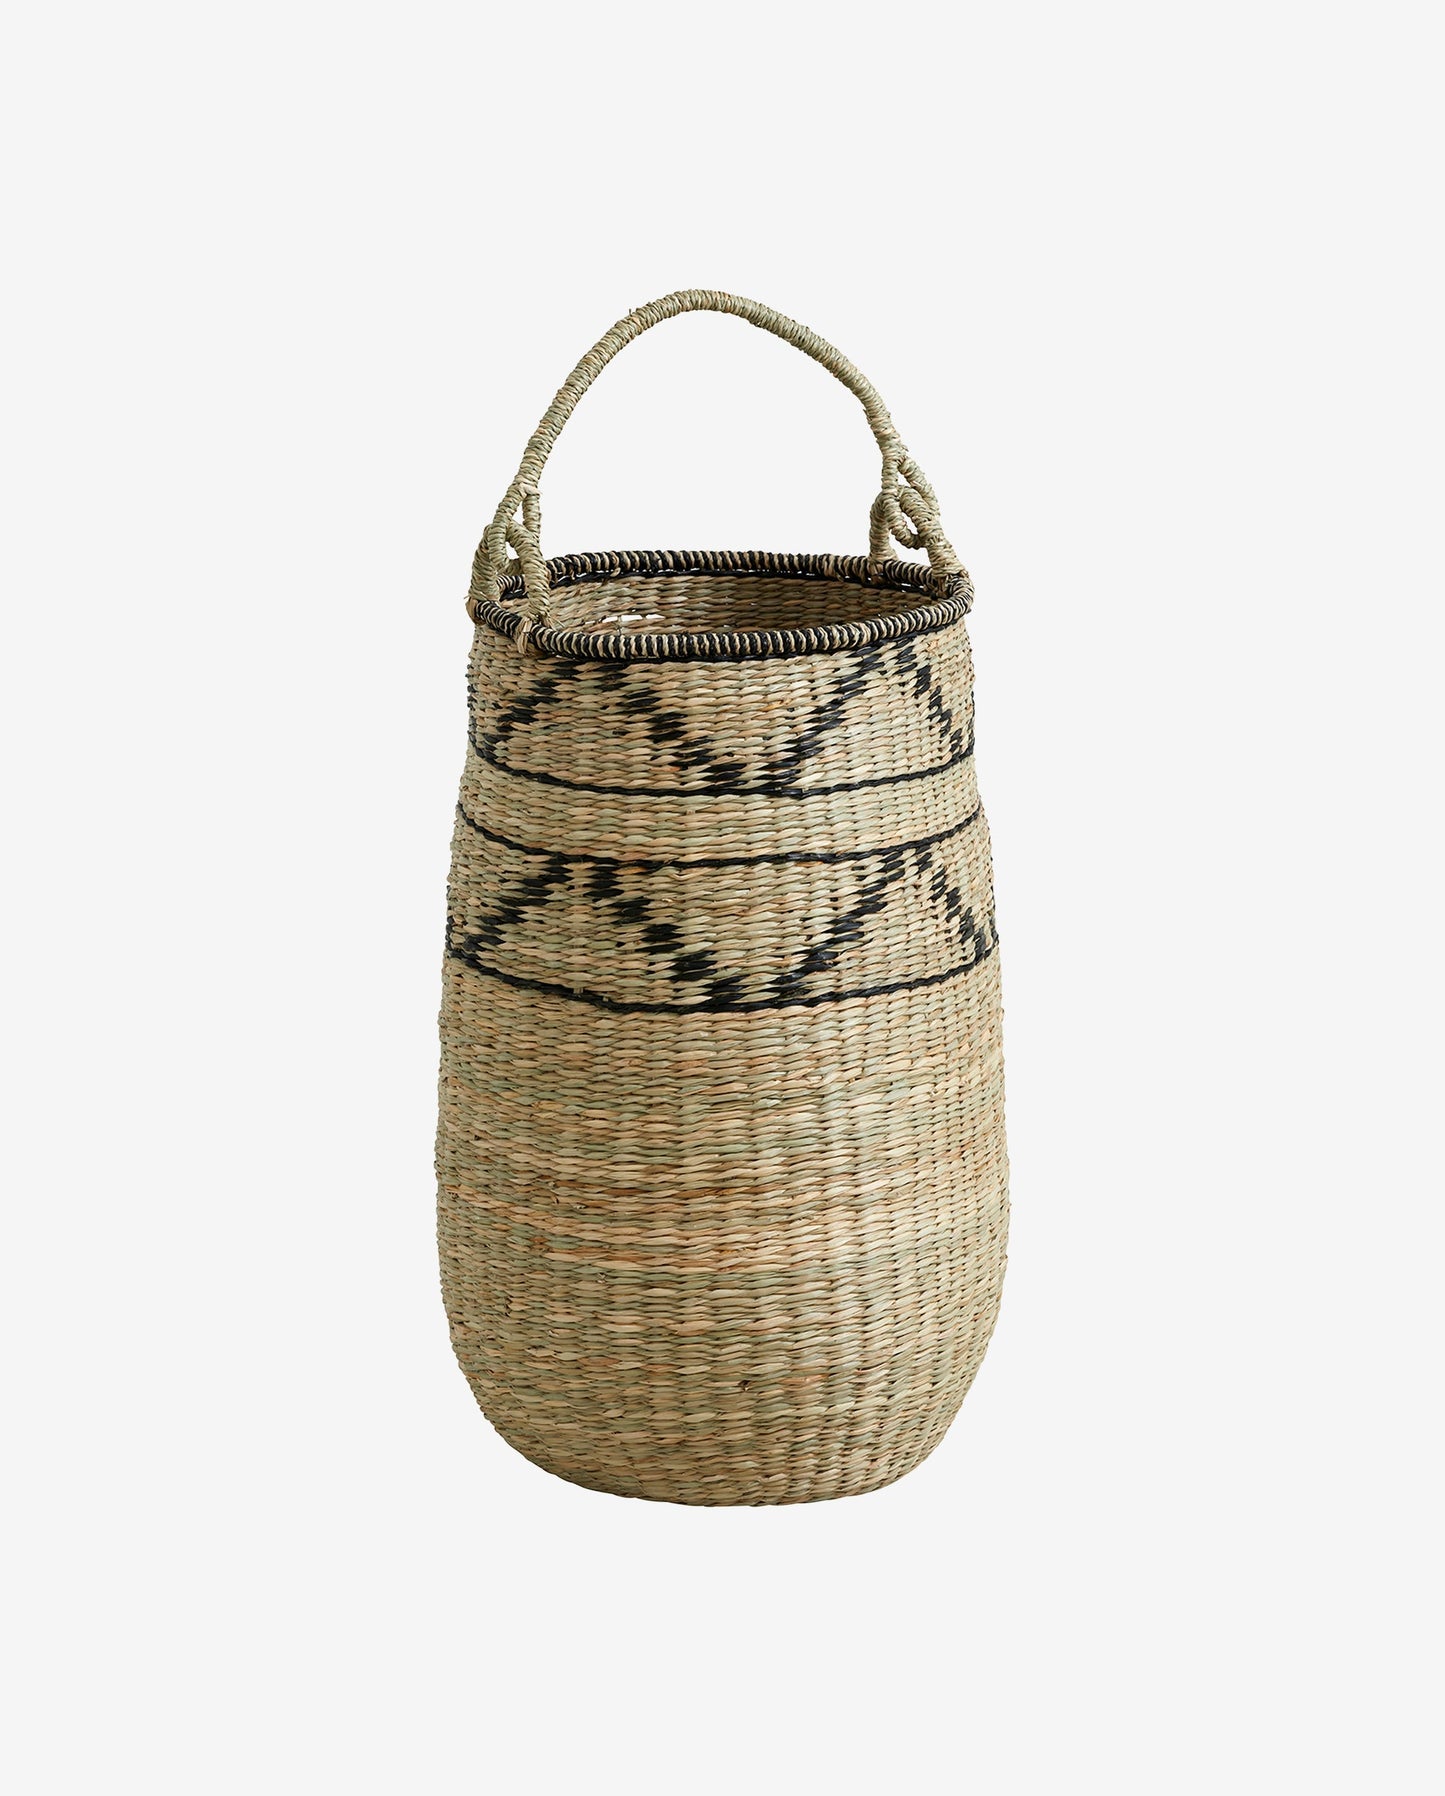 Nordal TROGIR basket w. handle, S, nature